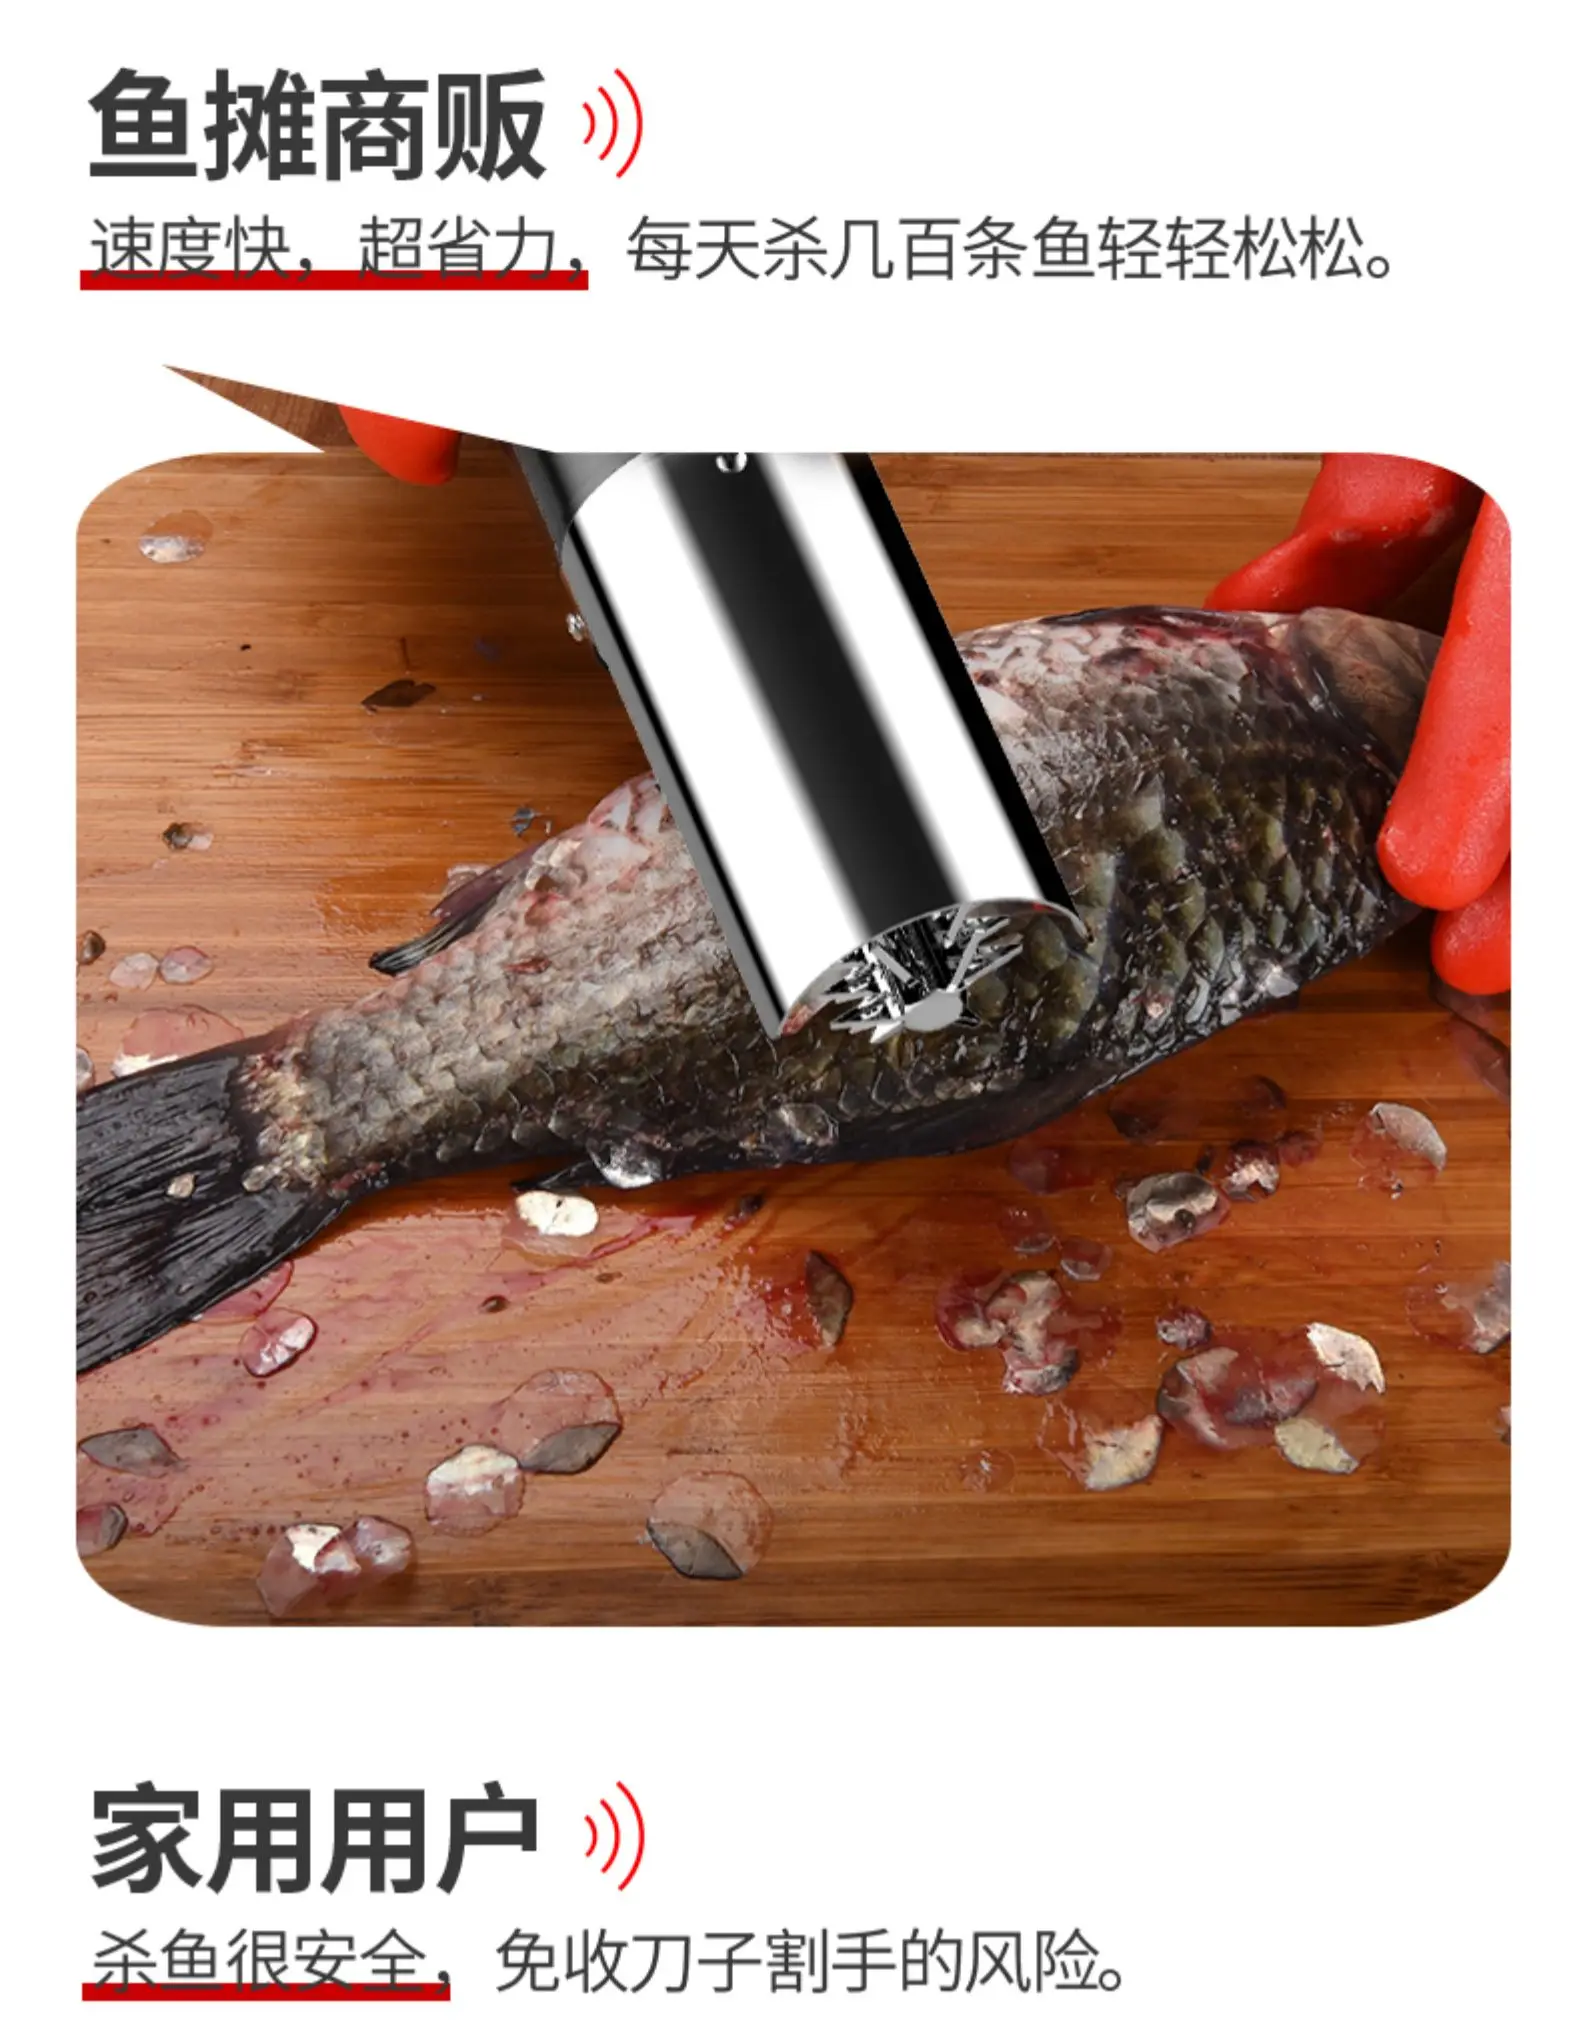 fish sacaler (6).jpg